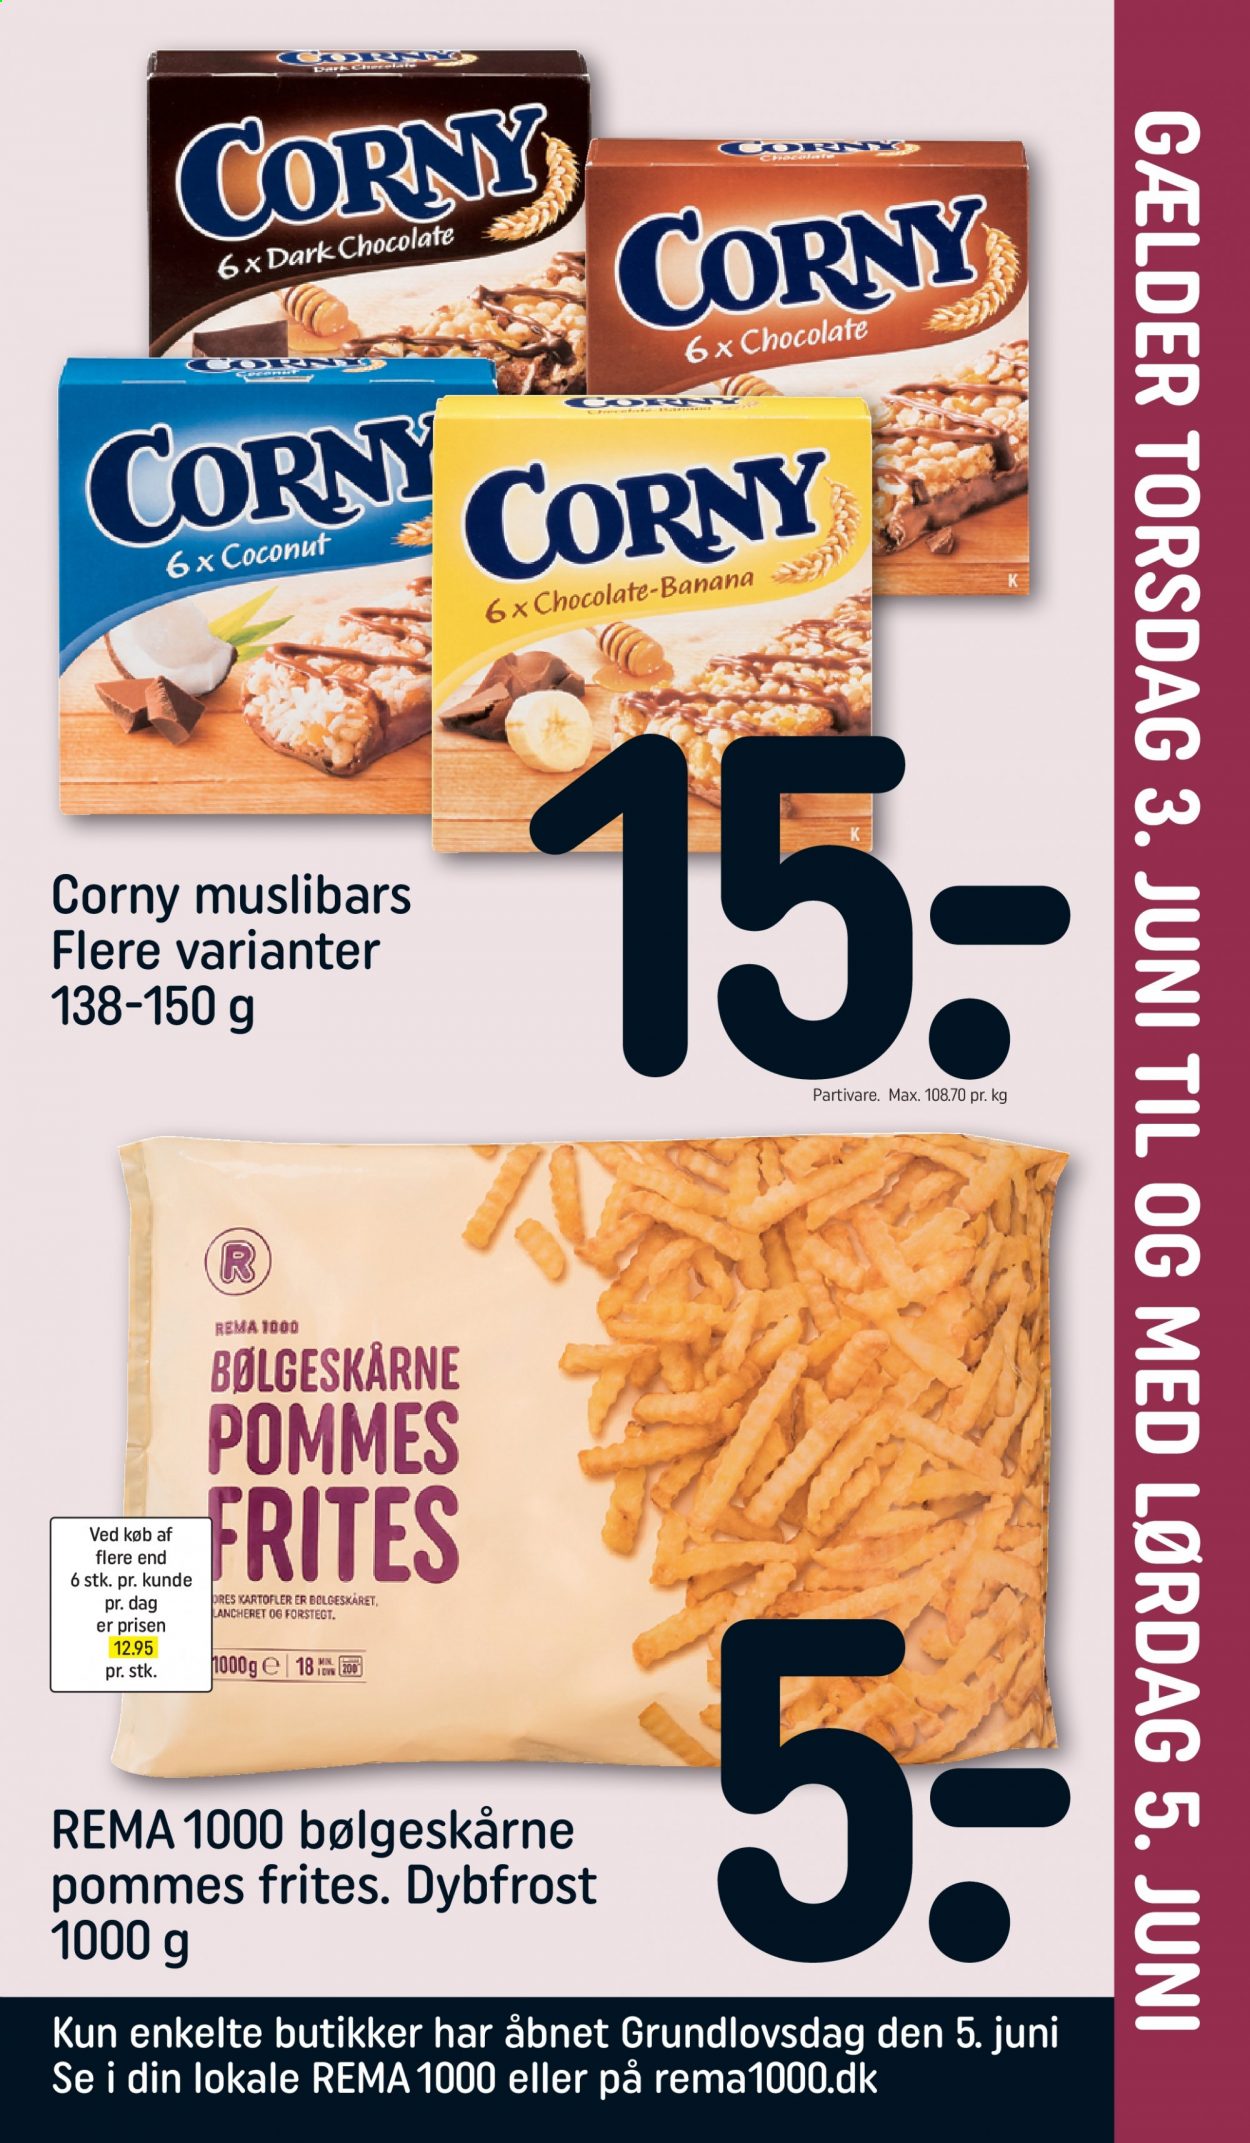 thumbnail - Rema 1000 tilbud  - 3.6.2021 - 5.6.2021 - tilbudsprodukter - kartofler, pommes frites, Corny. Side 1.